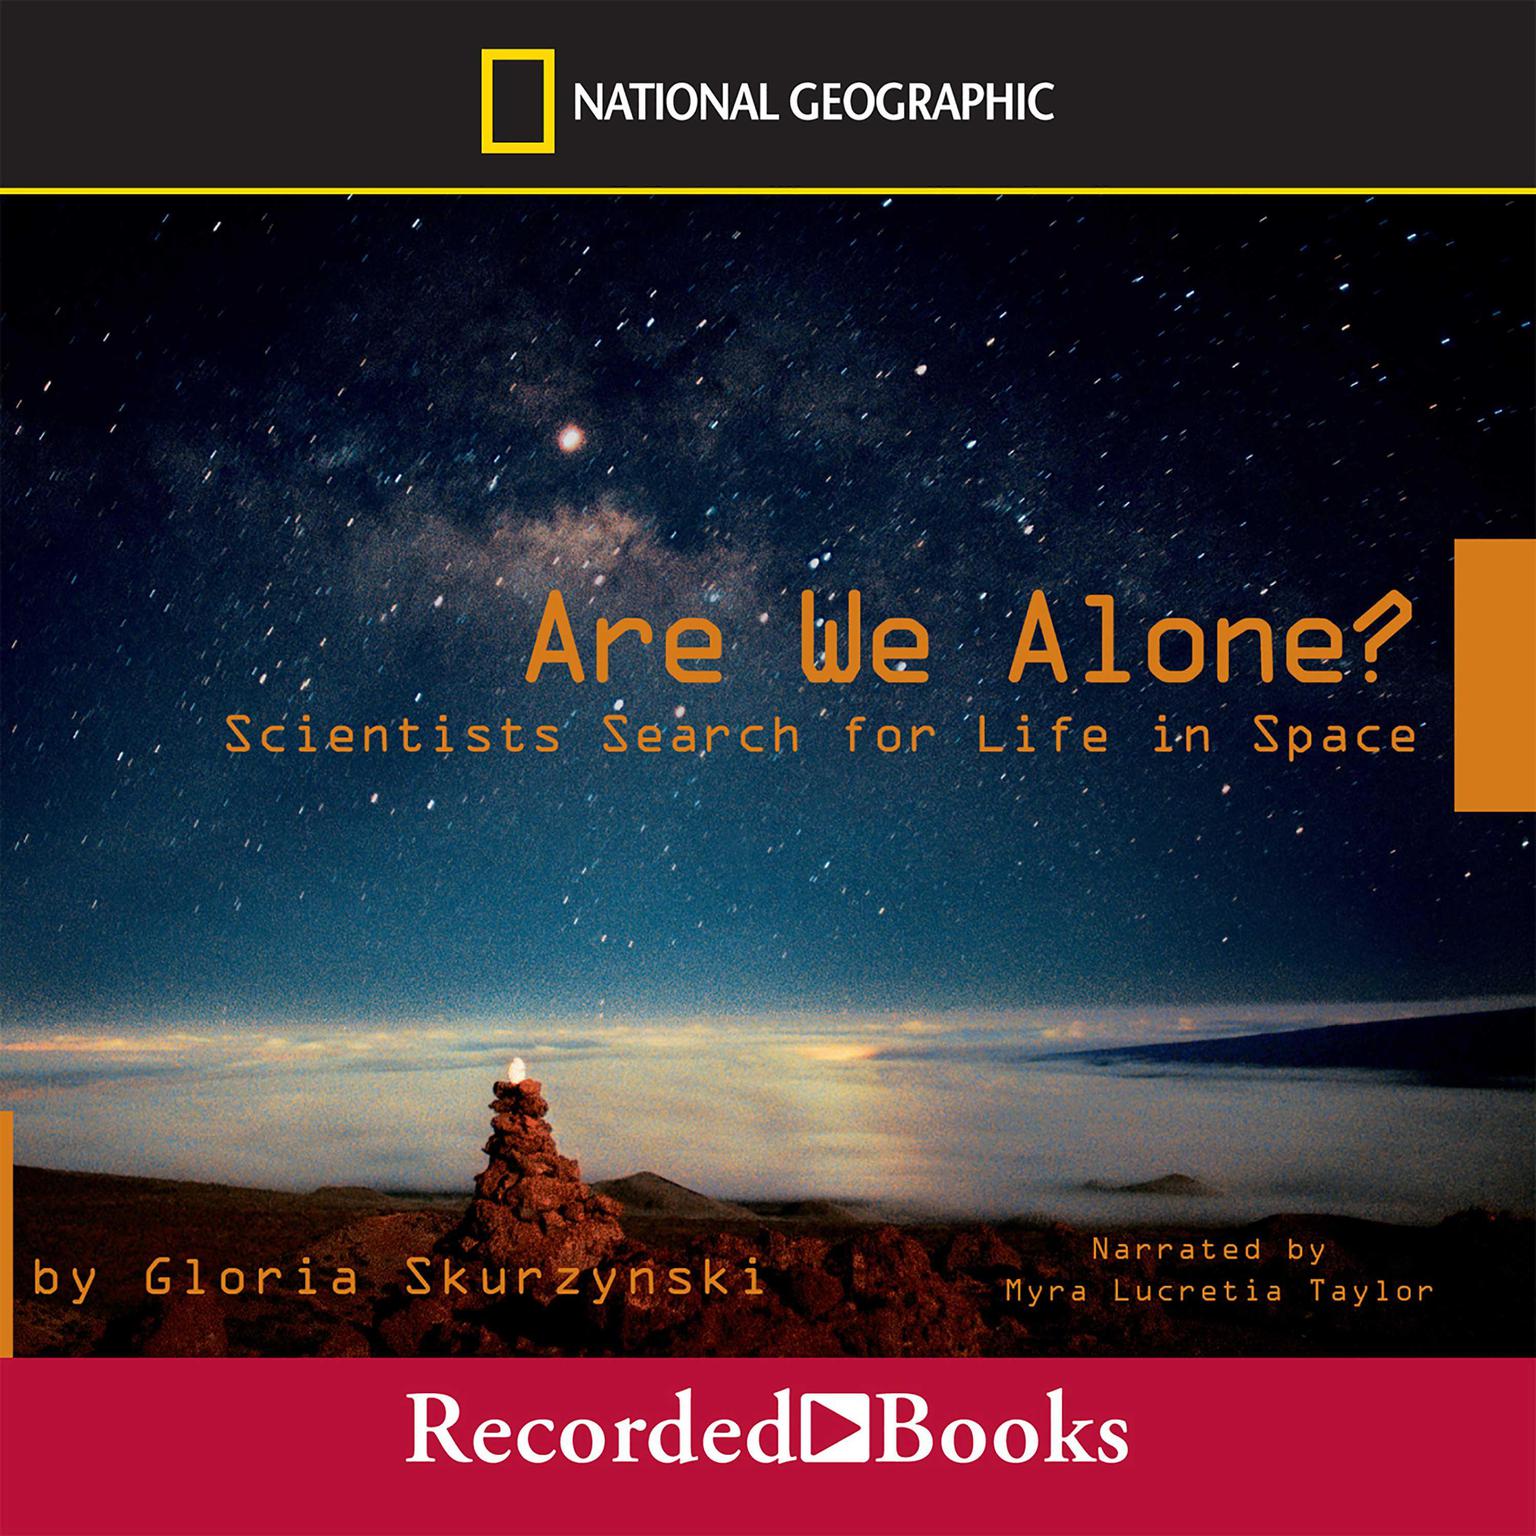 Are We Alone? Scientists Search for Life in Space: Scientists Search for Life in Space Audiobook, by Gloria Skurzynski